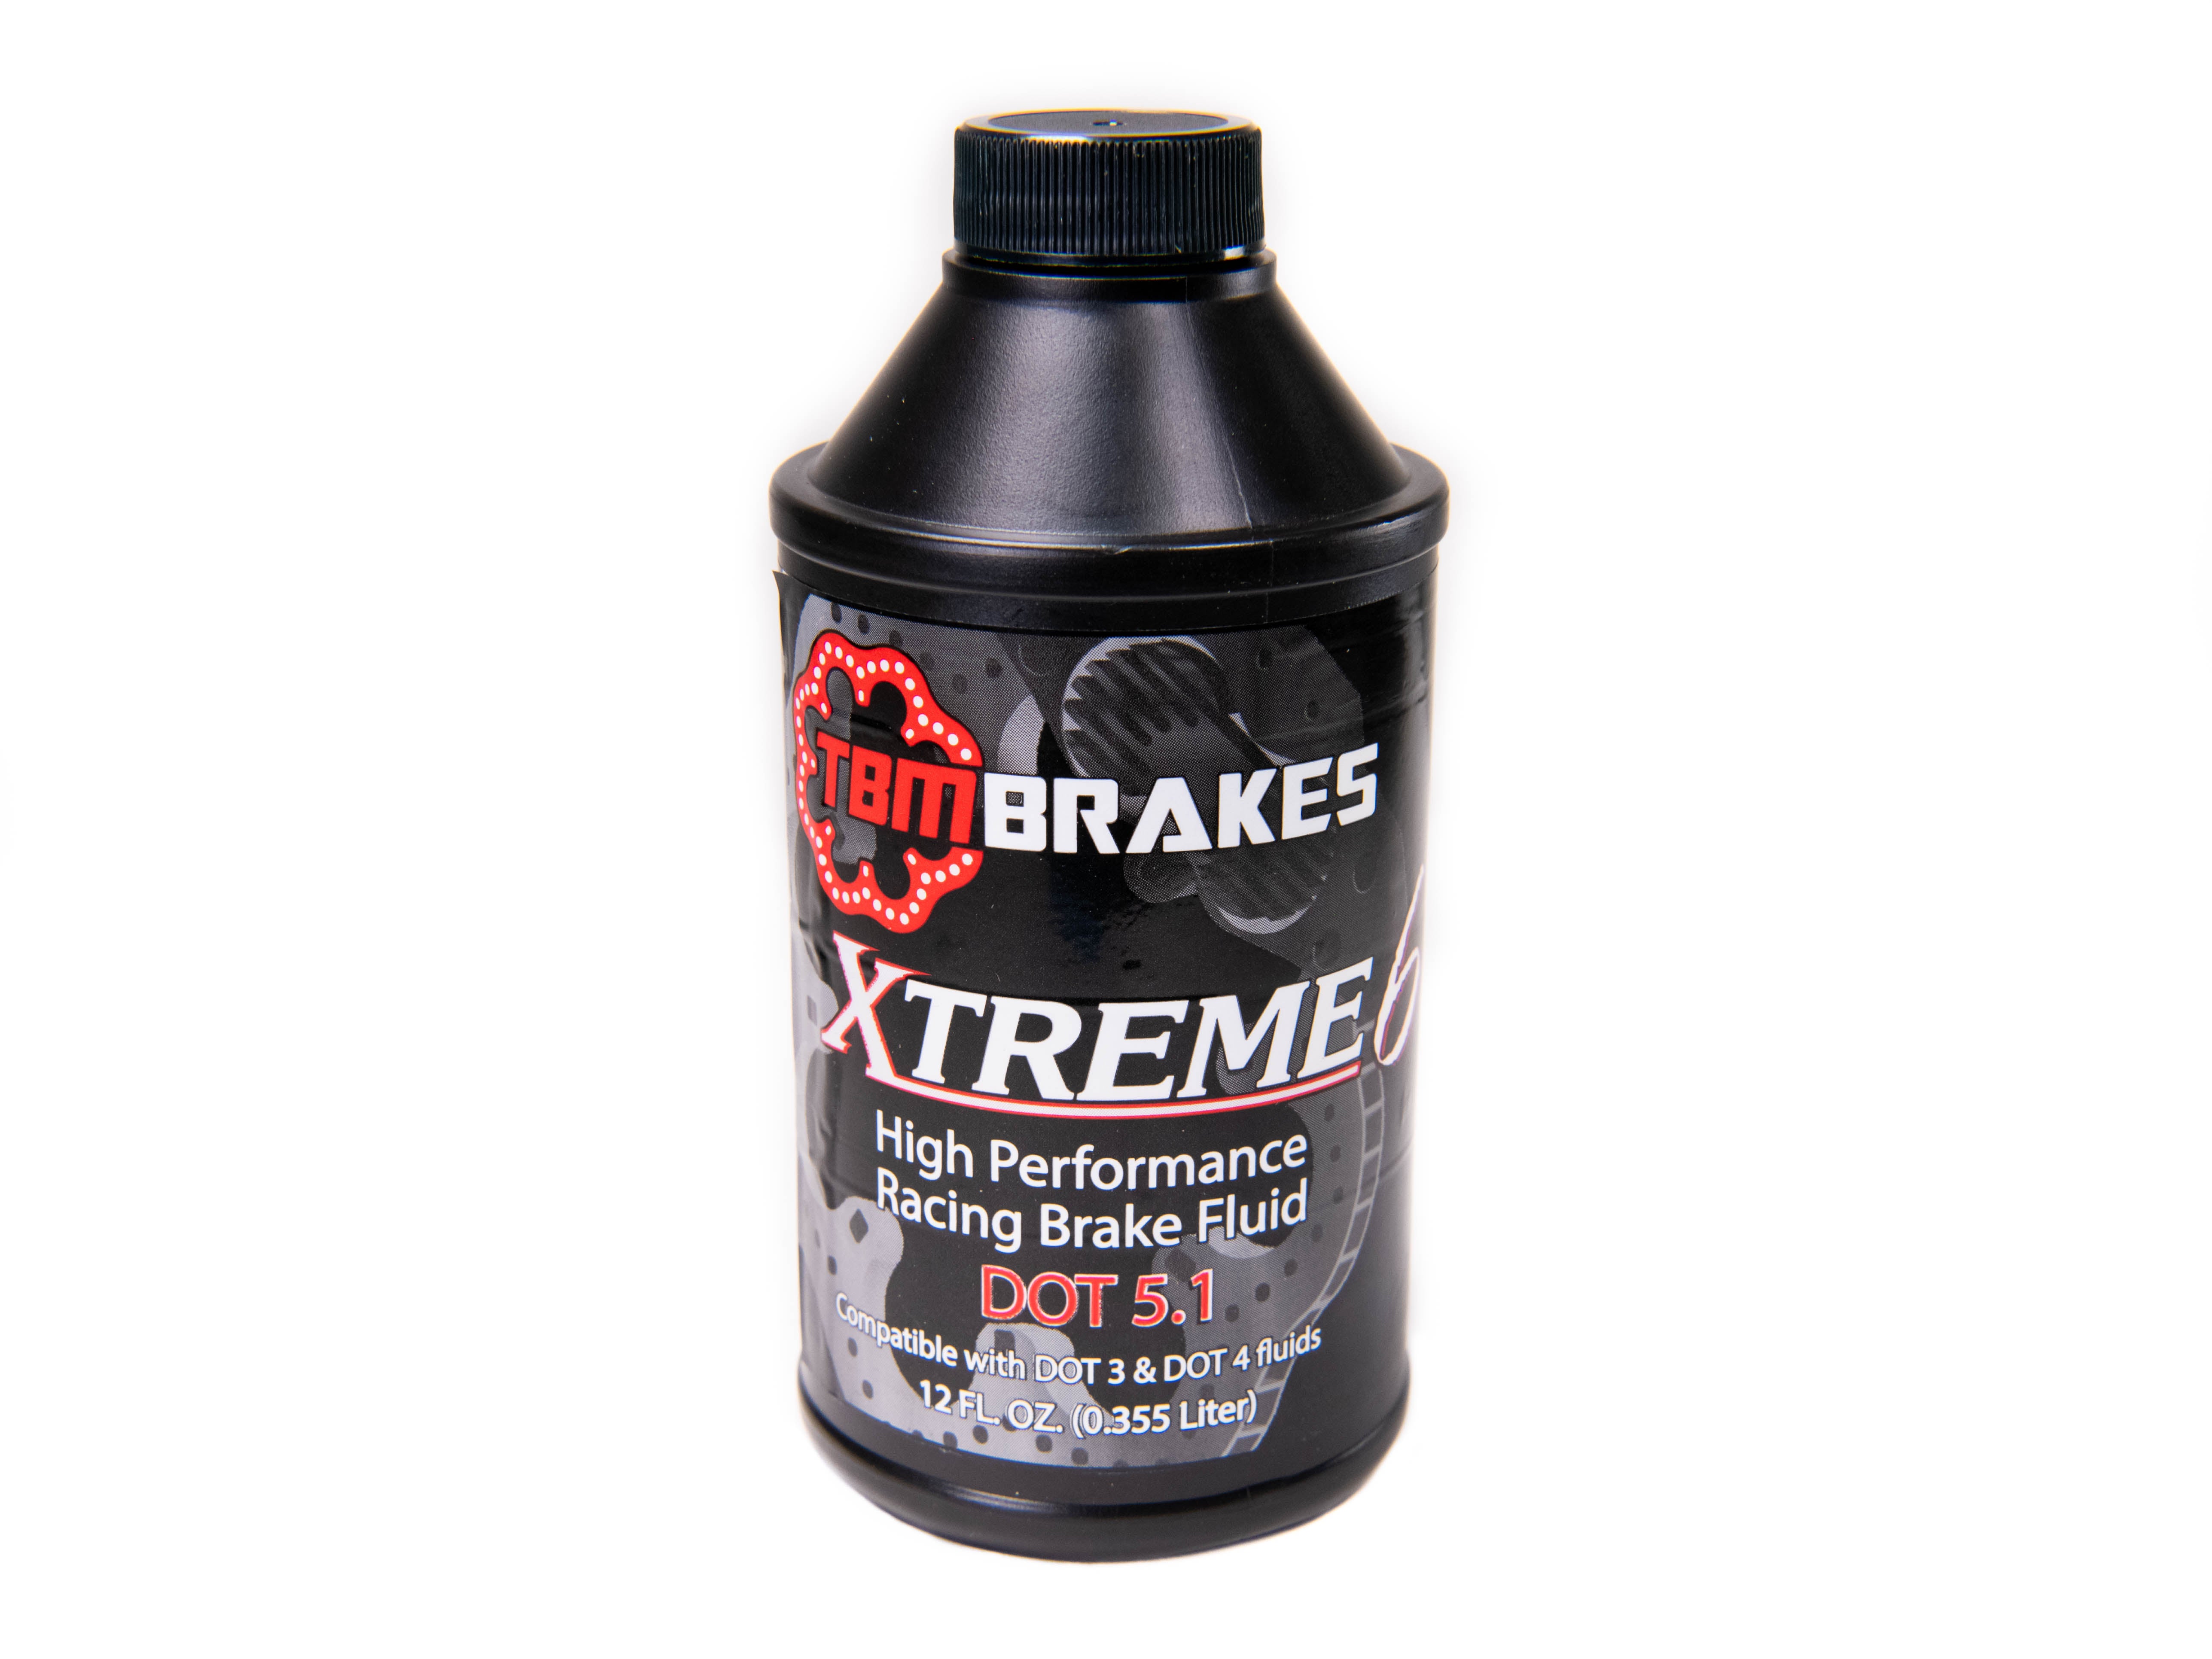 Tomaat Waakzaam Eerlijk TBM DOT 5.1 Extreme 6 Brake Fluid 12 oz – TBM Brakes